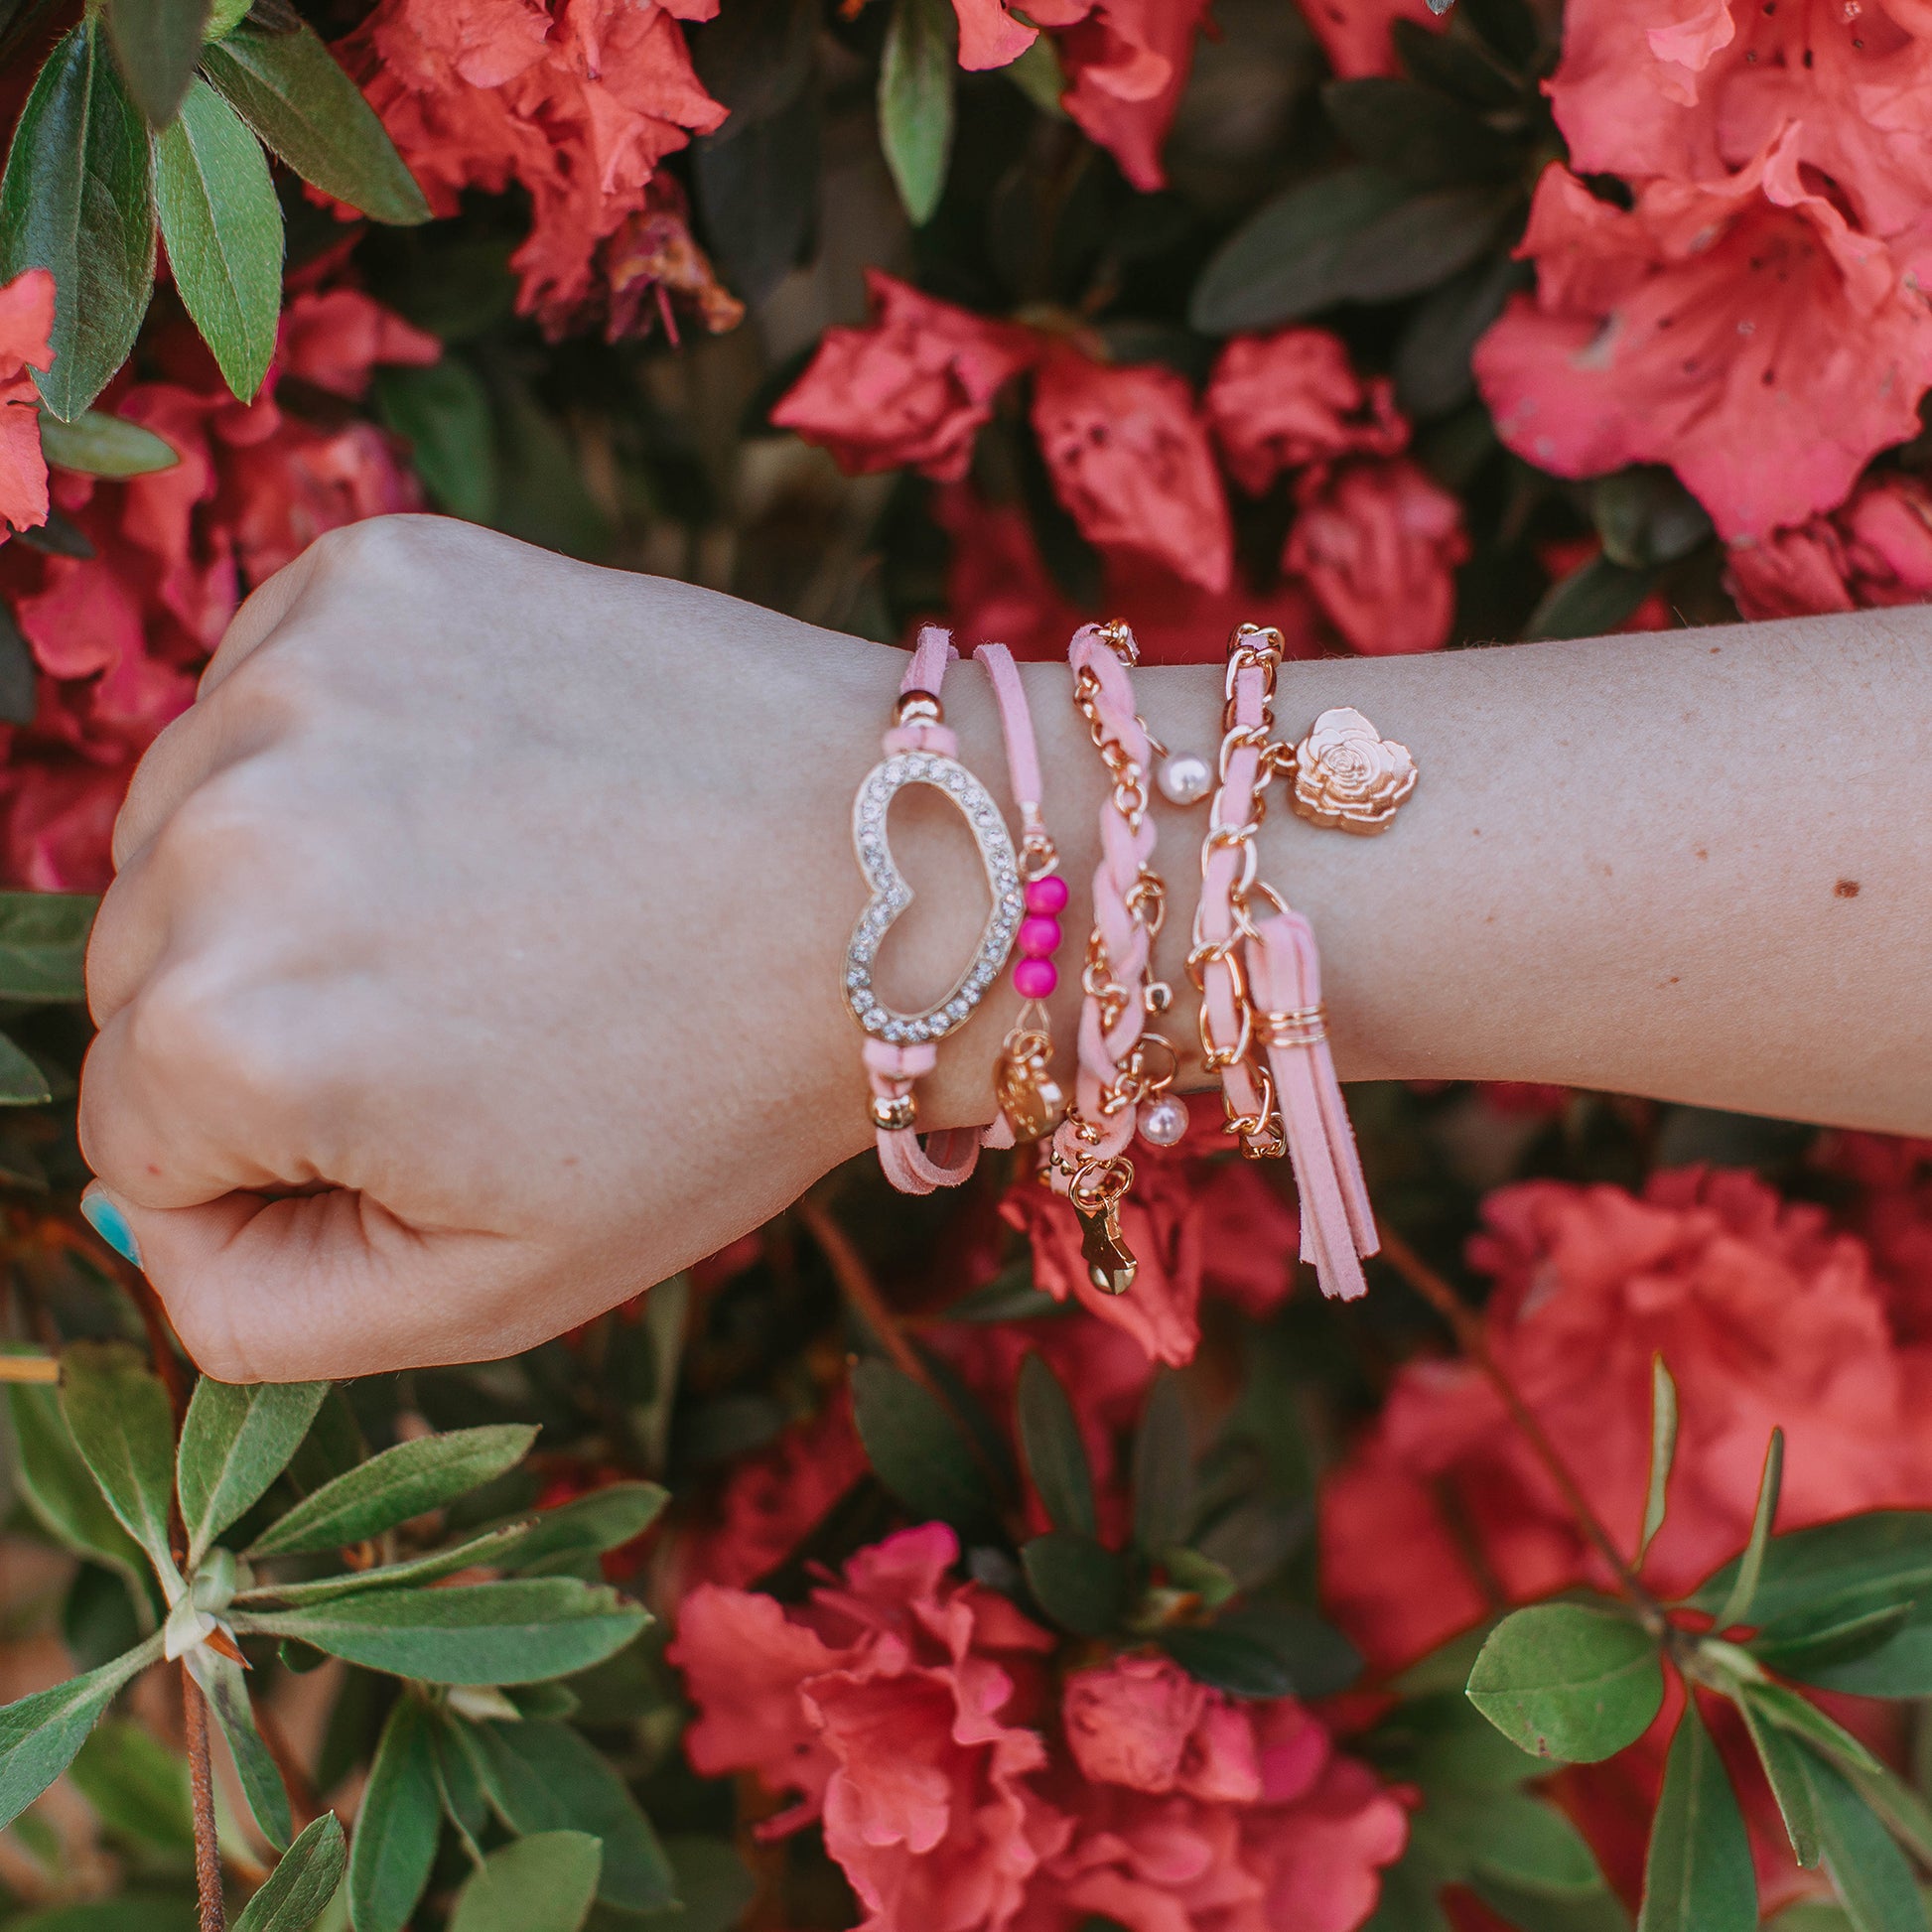 Juicy Couture Make it Real Pink & Precious Bracelet Kit - Makes 10 Bracelets